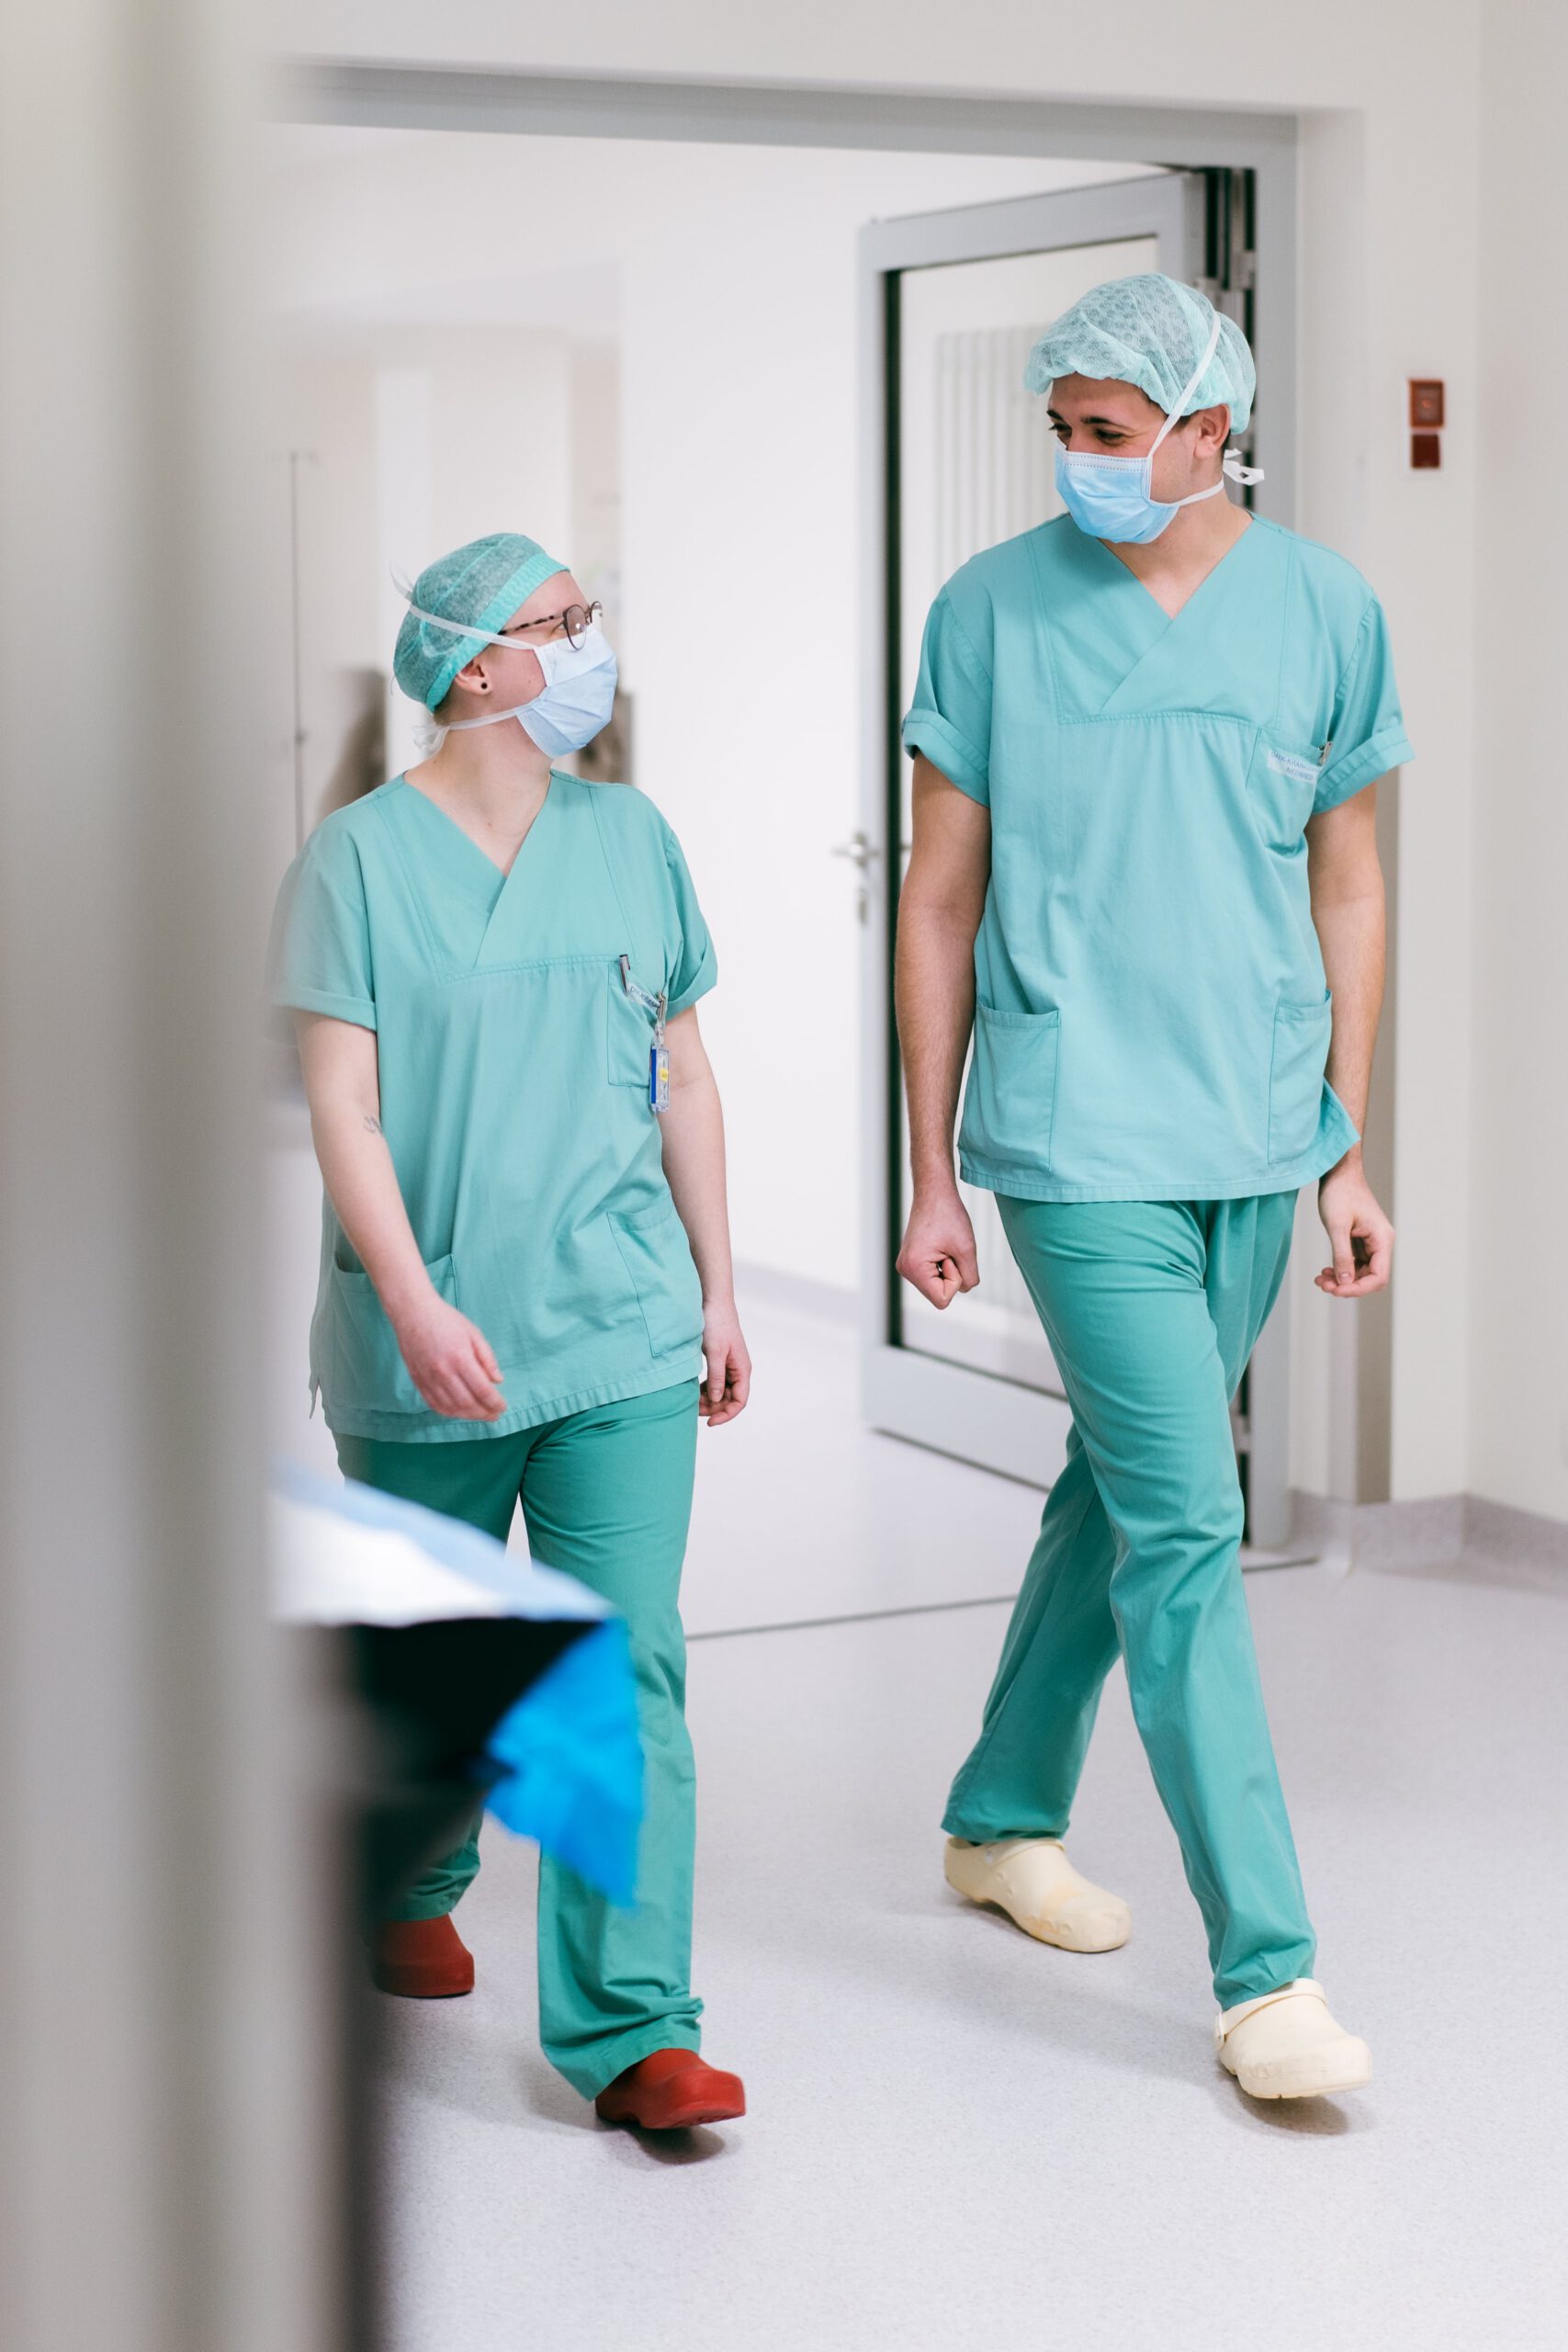 Gefäßchirurgie Team DRK Krankenhaus Neuwied